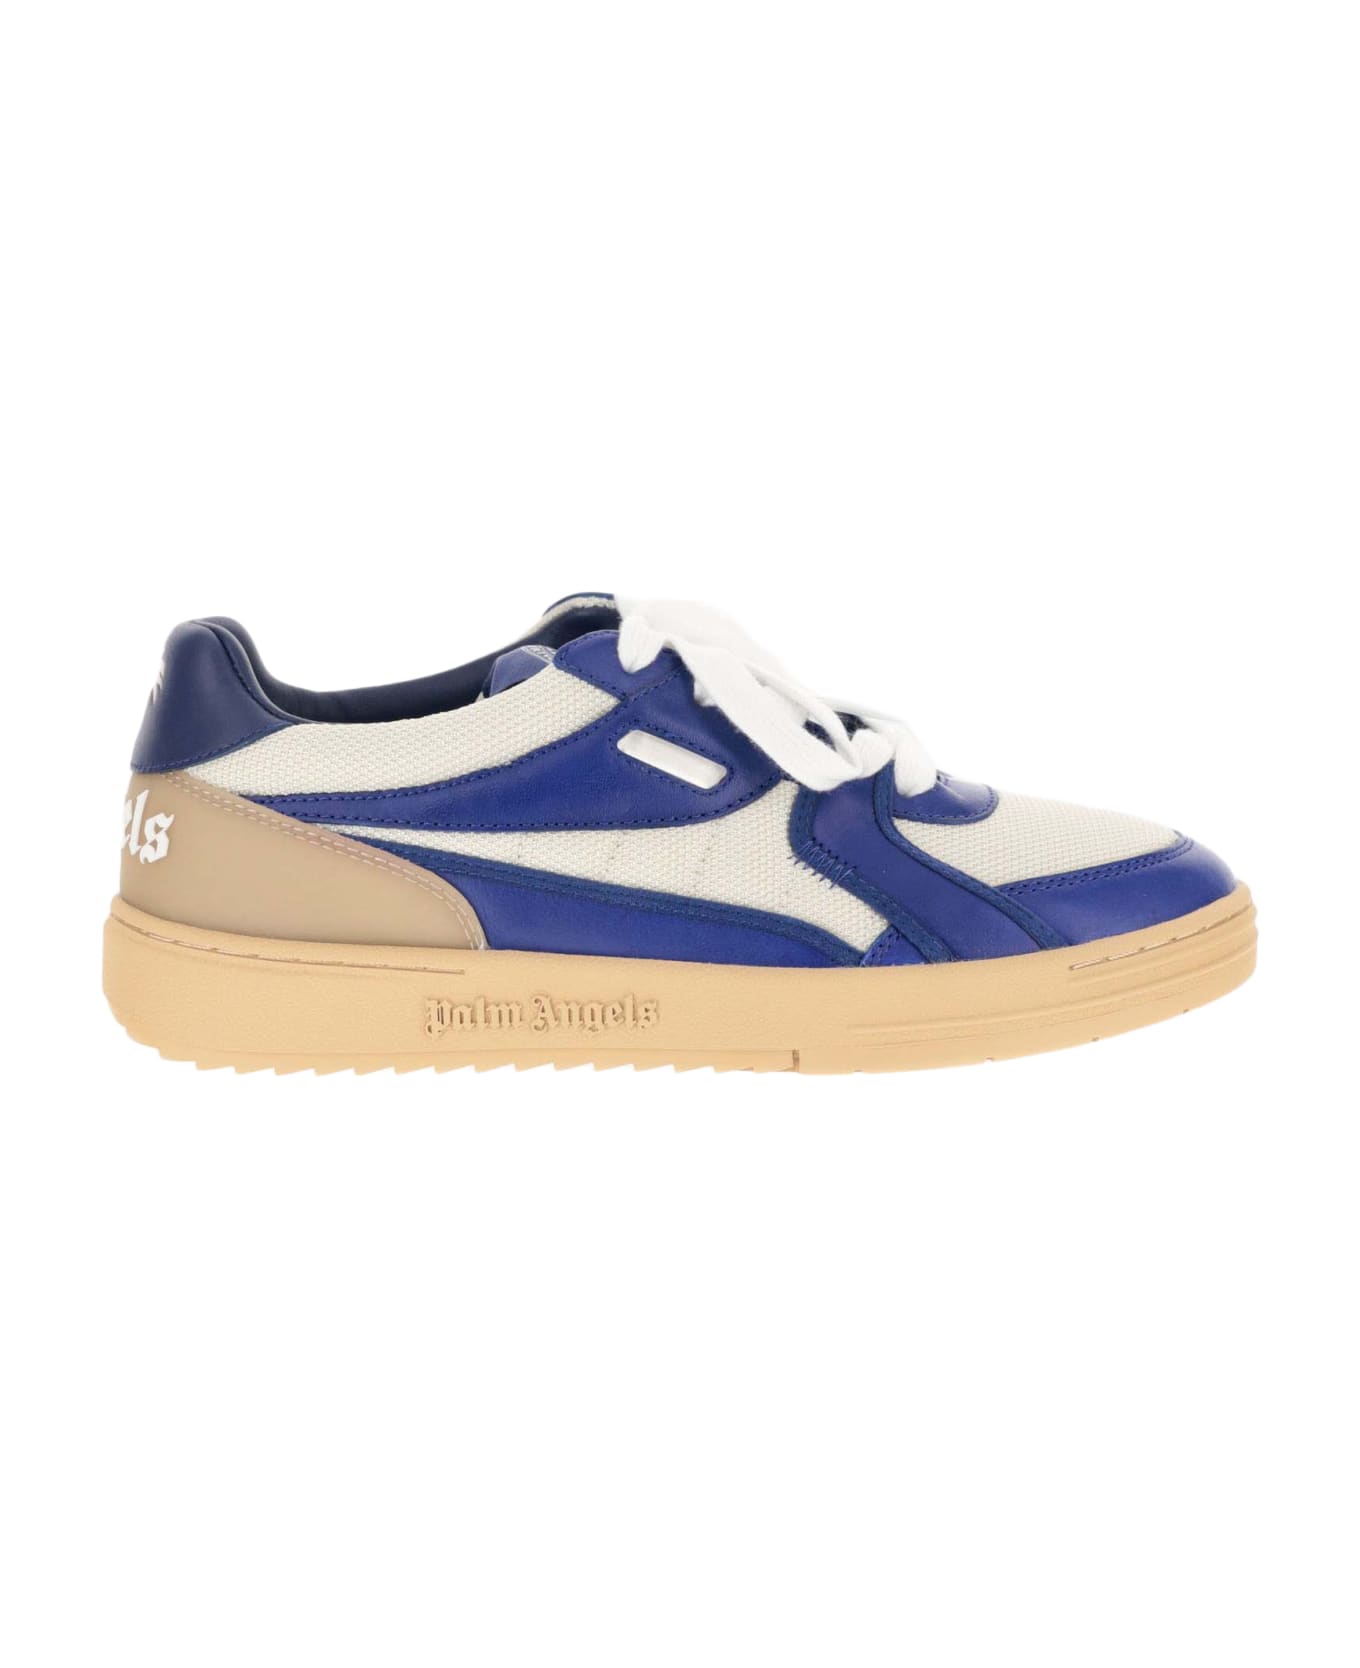 Palm Angels University Sneakers - Blue スニーカー